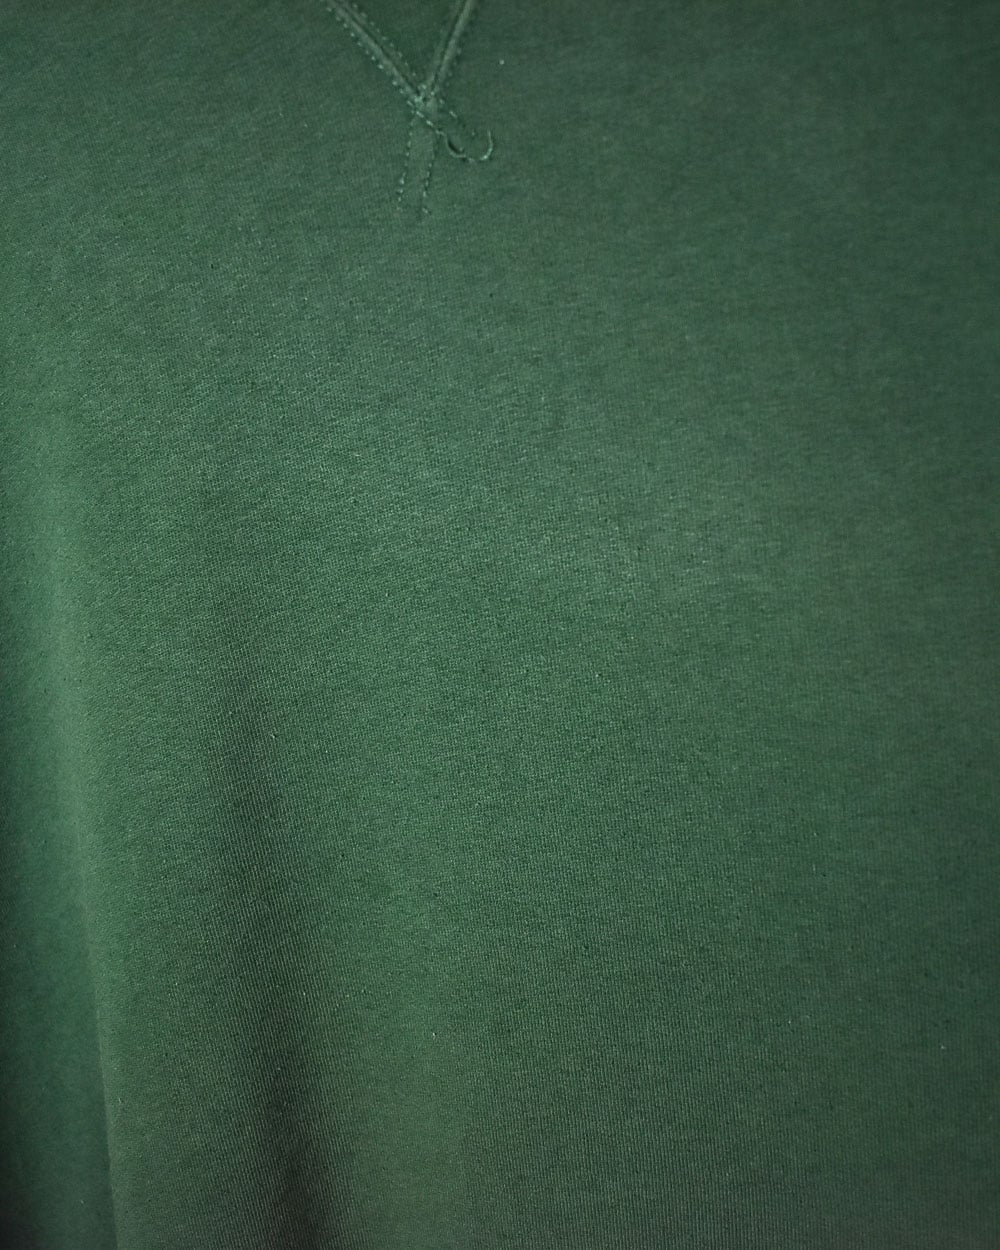 Green Polo Ralph Lauren Sweatshirt - XX-Large